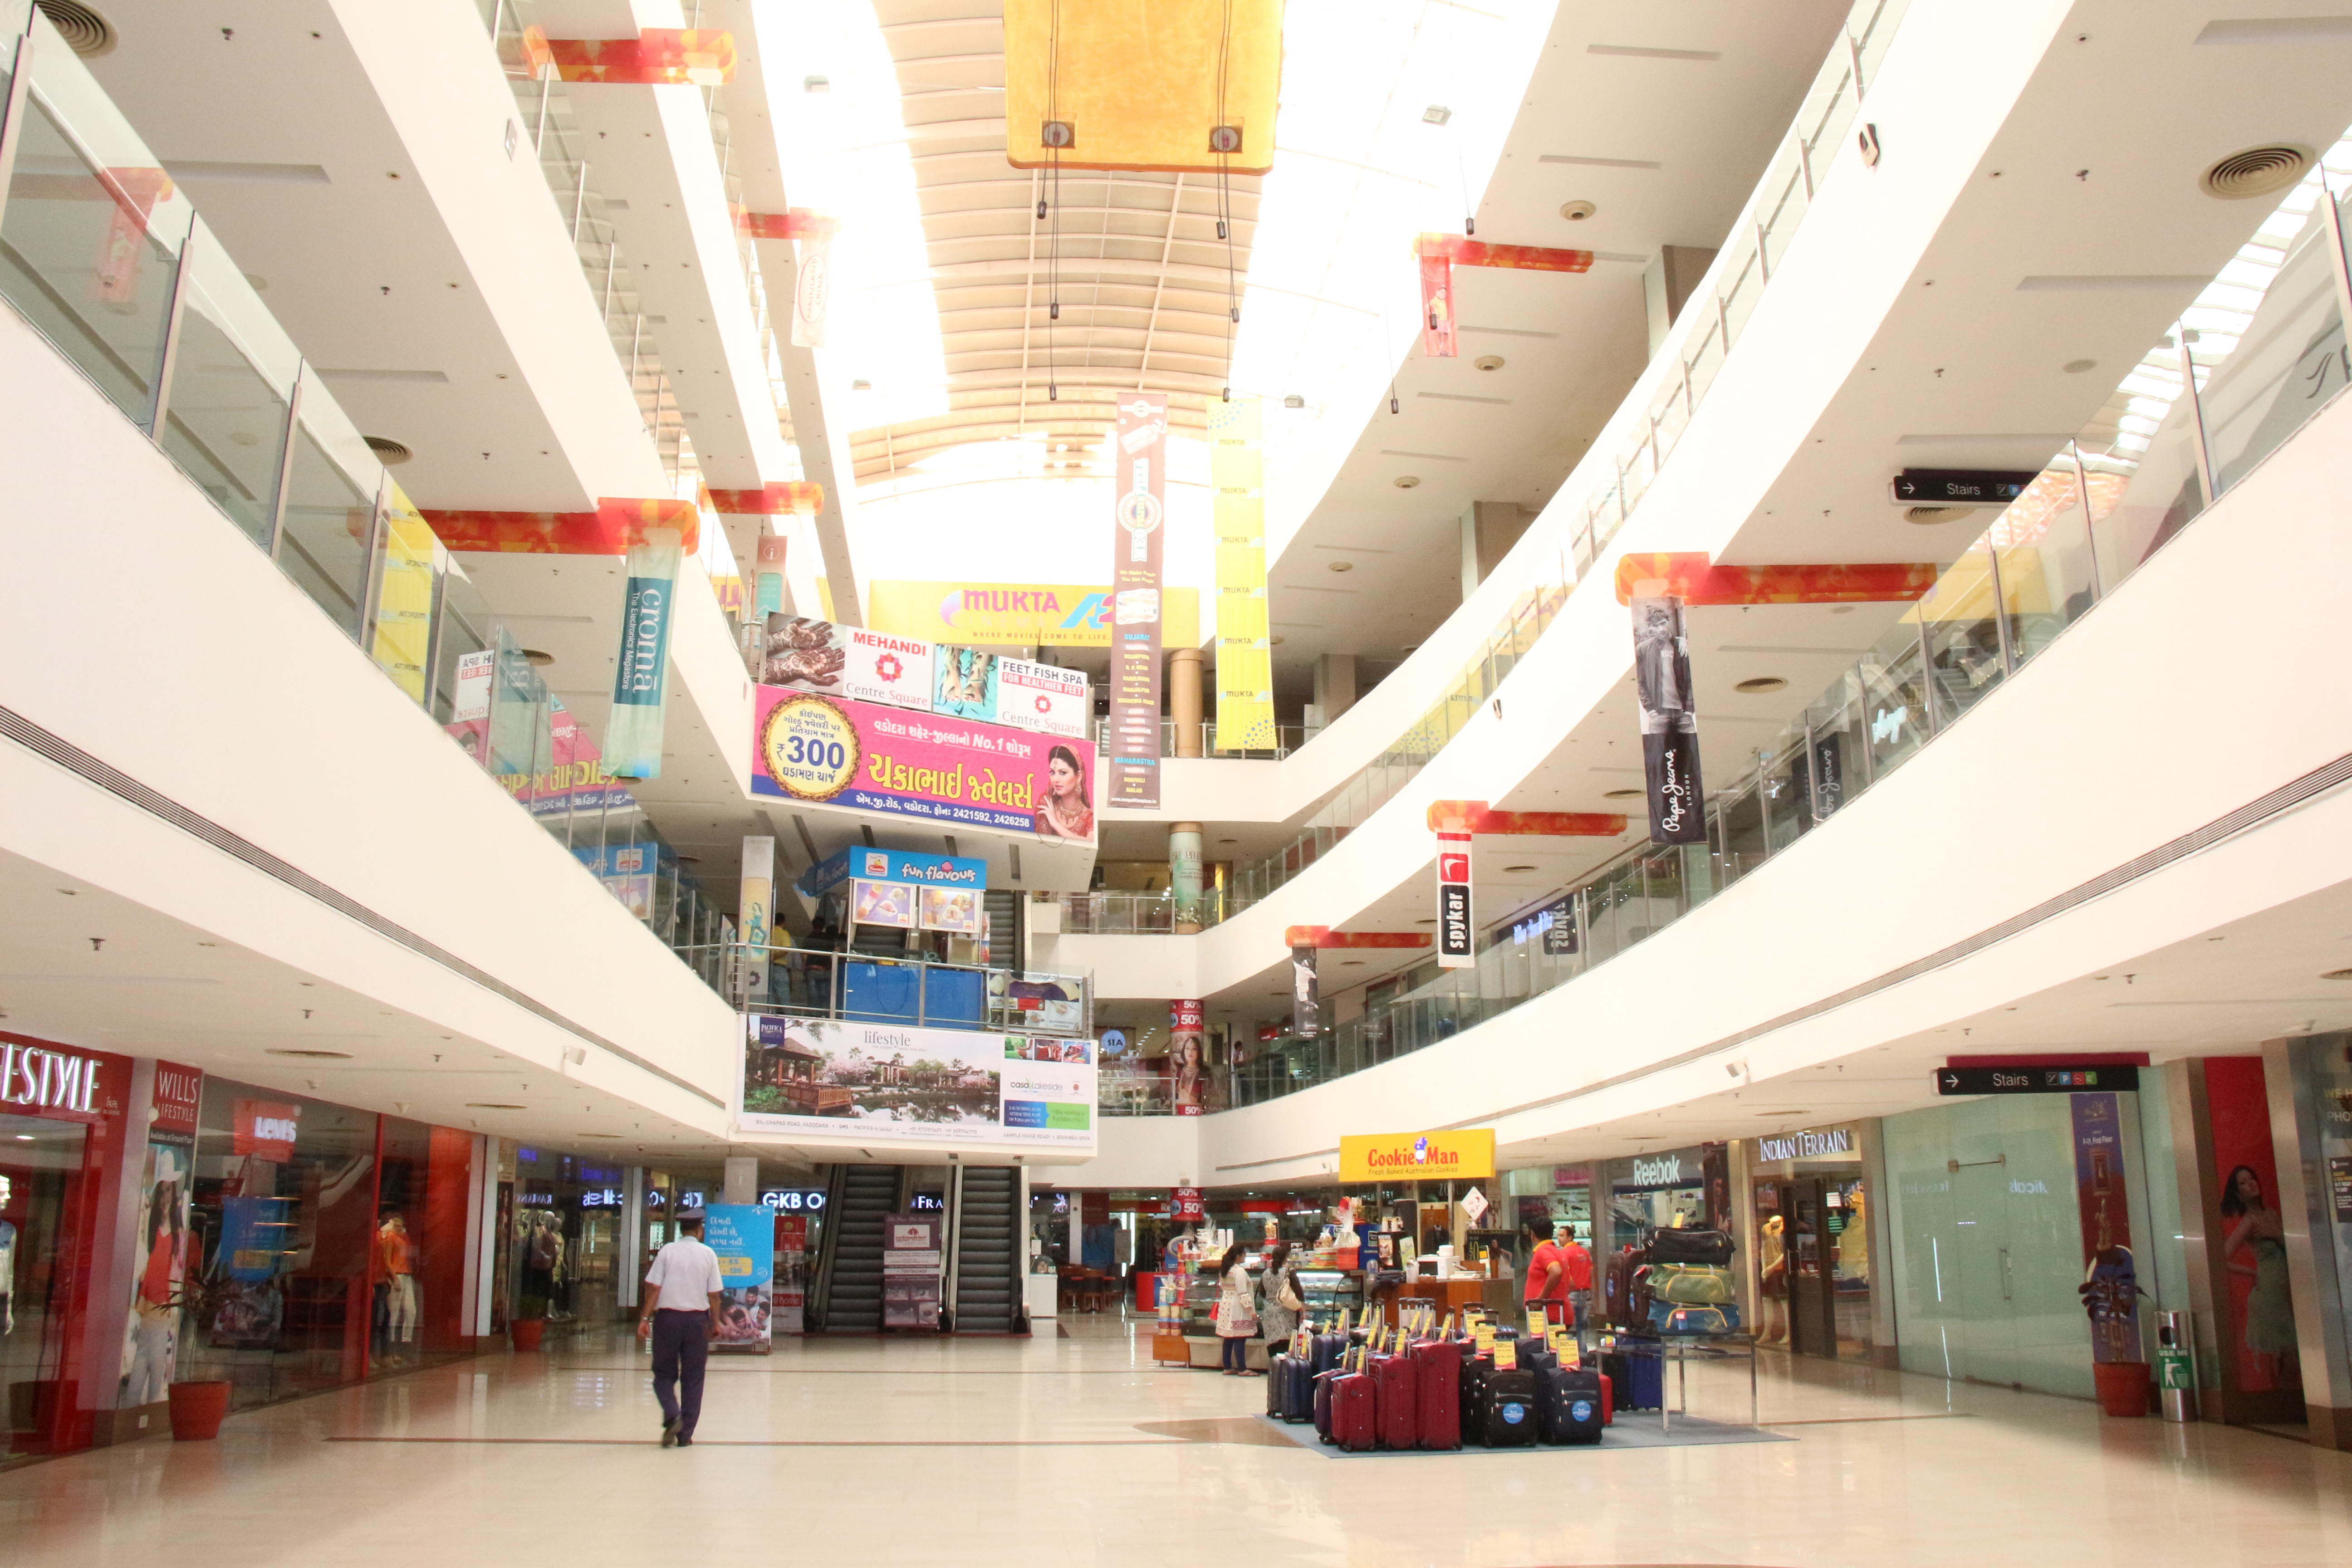 shopping malls in vadodara, shopping mall in vadodara, centre square mall in vadodar, centre square mall, malls in vadodara, shopping mall, centre square mall, food court in vadodara